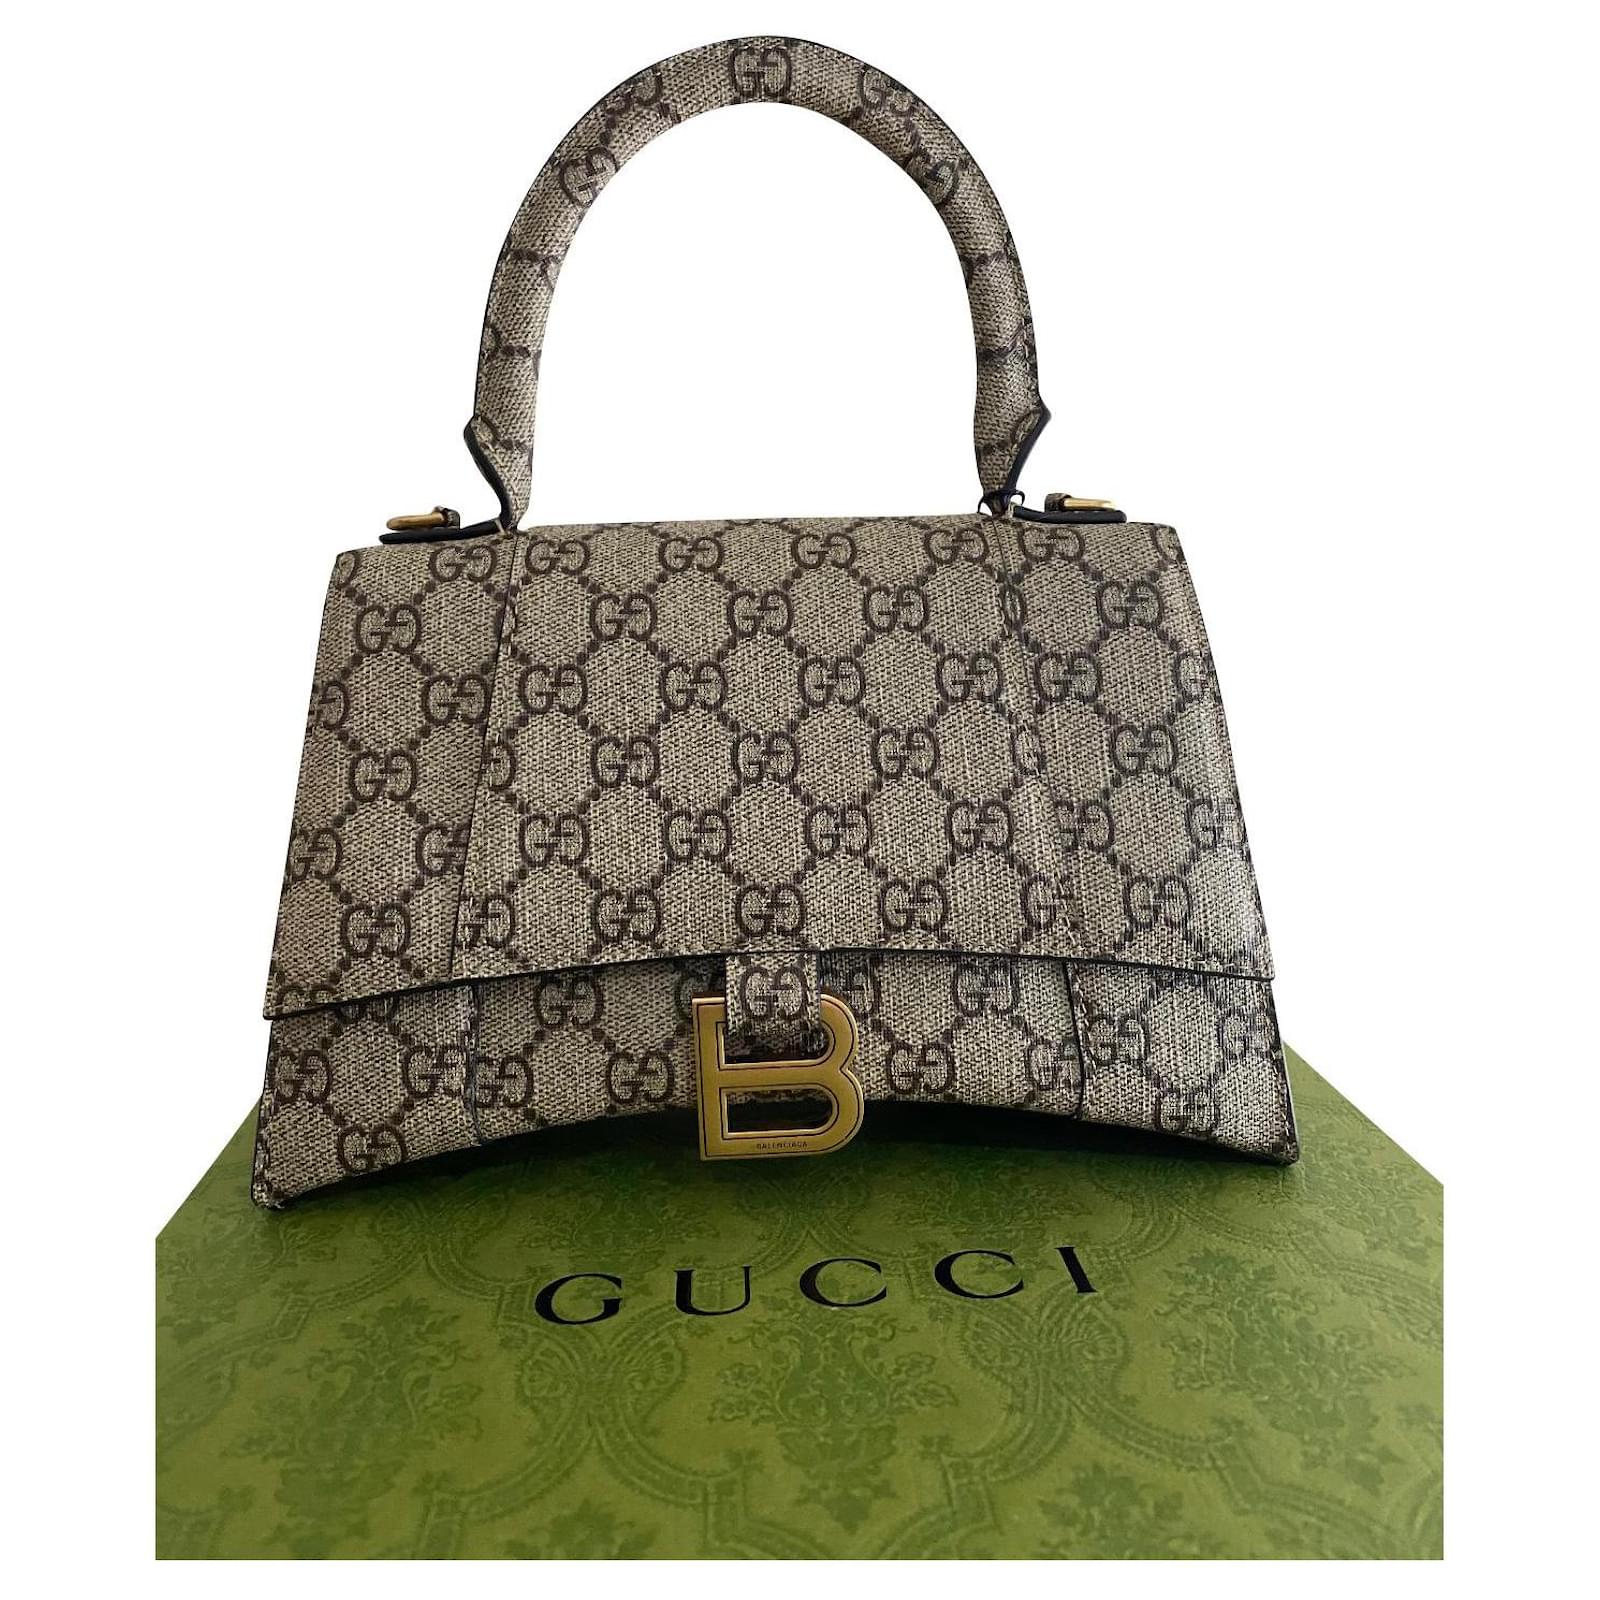 Gucci x Balenciaga The Hacker Project Small Hourglass Bag Beige/Ebony